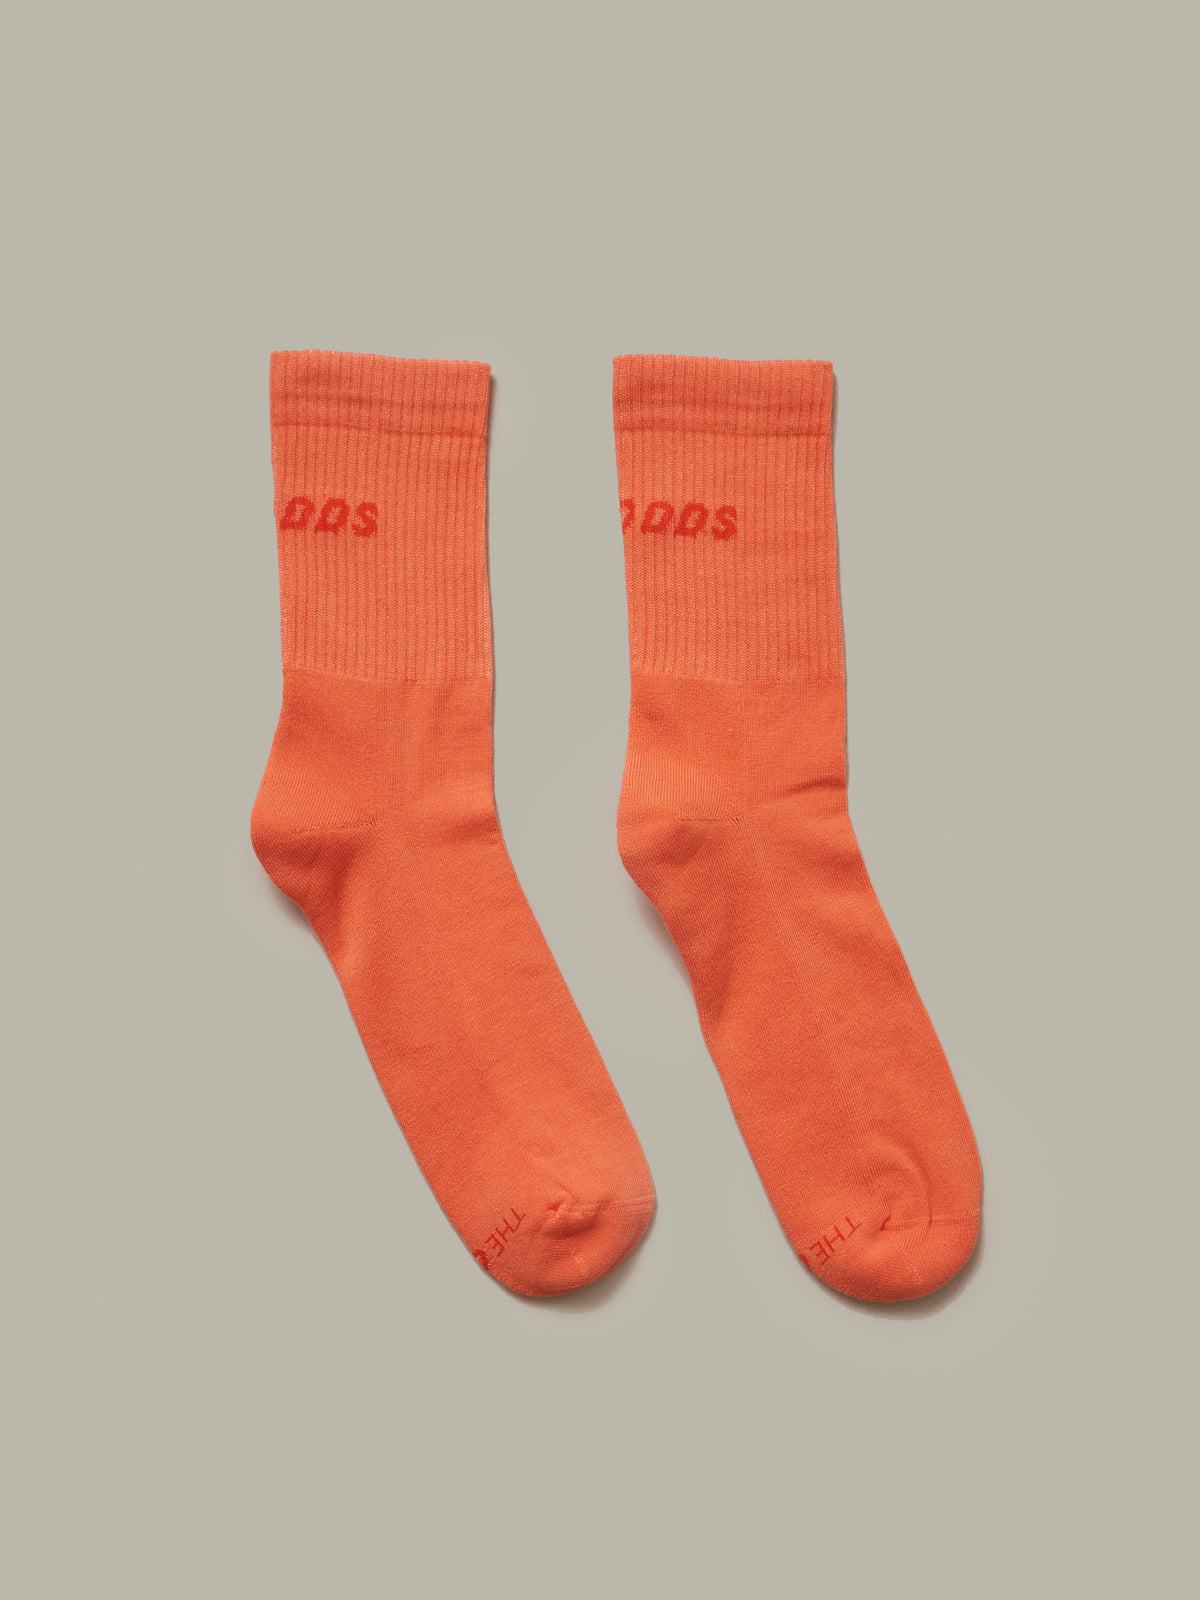 Neo Socks With The Odd Orange Tone-On-Tone Logo/ alphabet